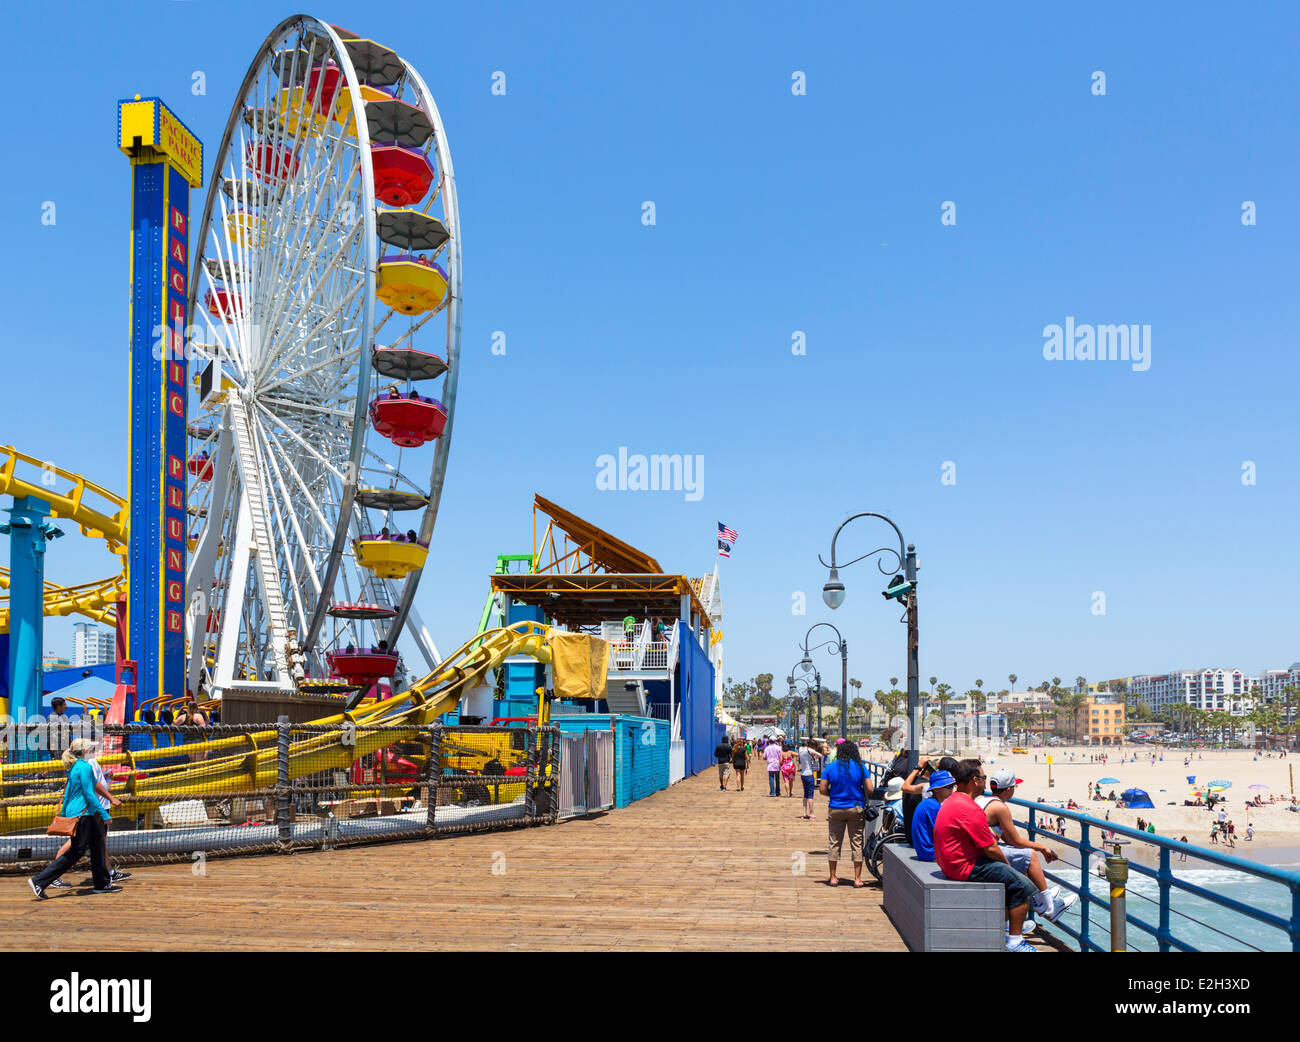 Ferris wheel at Pacific Park on Santa Monica pier, Los Angeles, California, USA Stock Photo